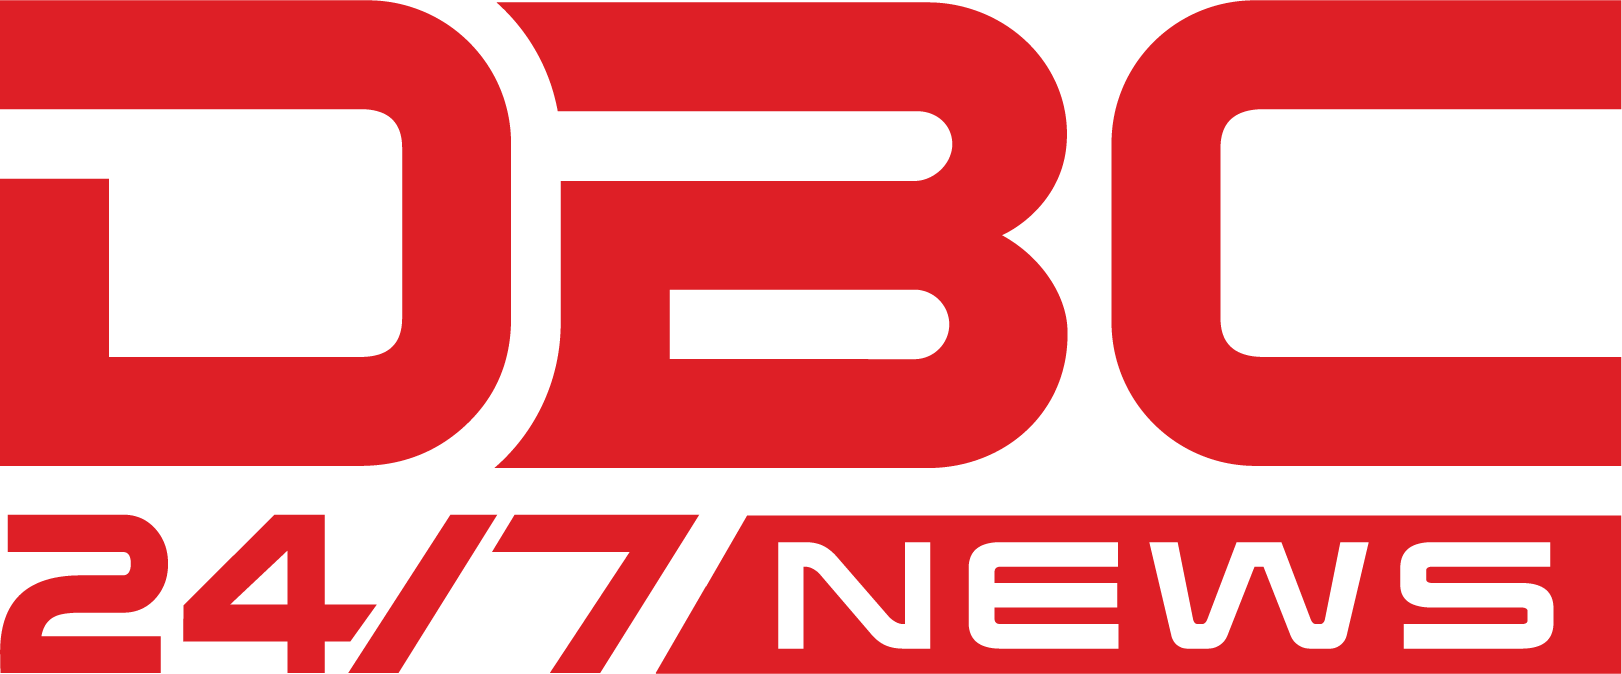 Dw tv. DBC логотип. Логотип ДБС. TV News logo. DW News logo.